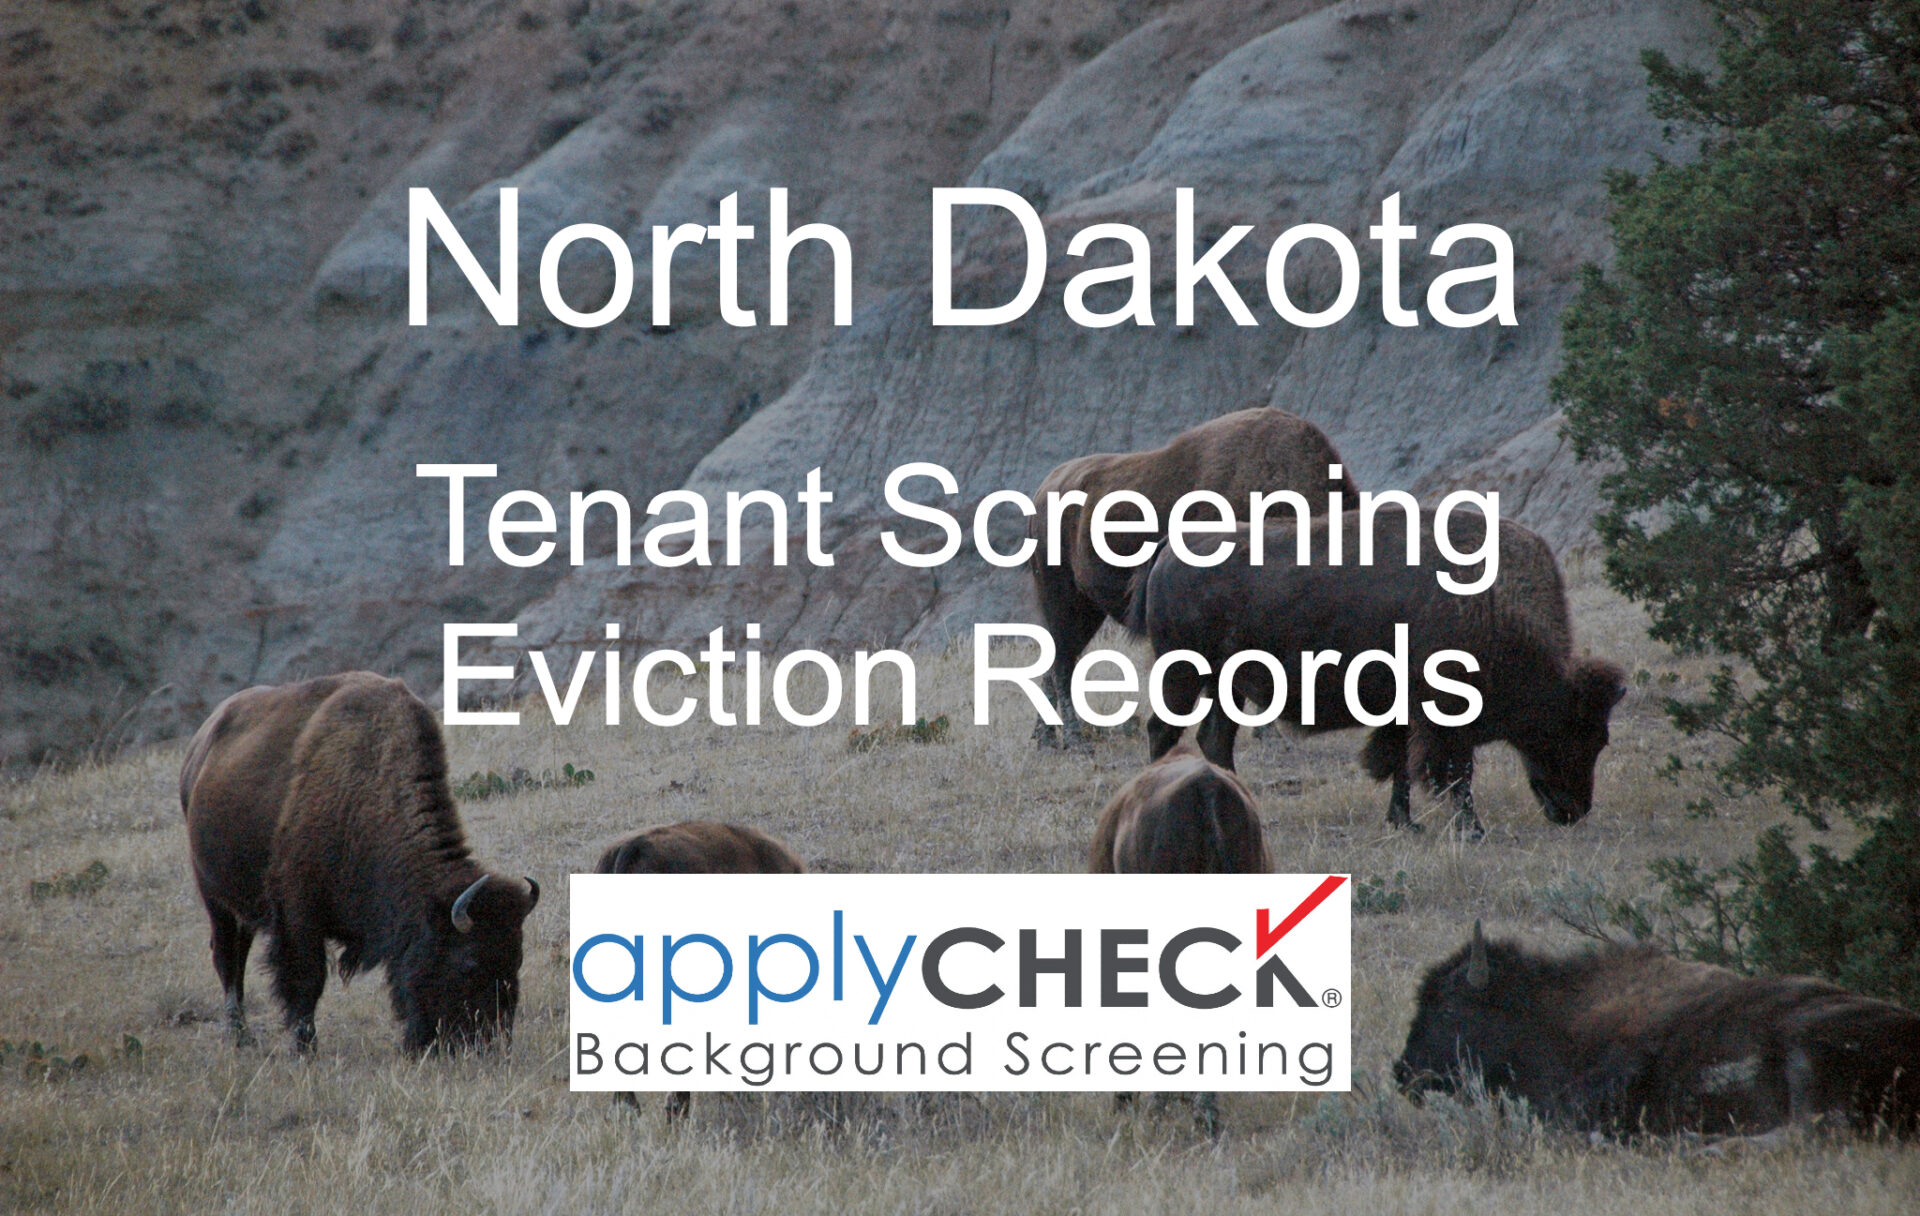 North dakota Tenant Screening and Eviction image